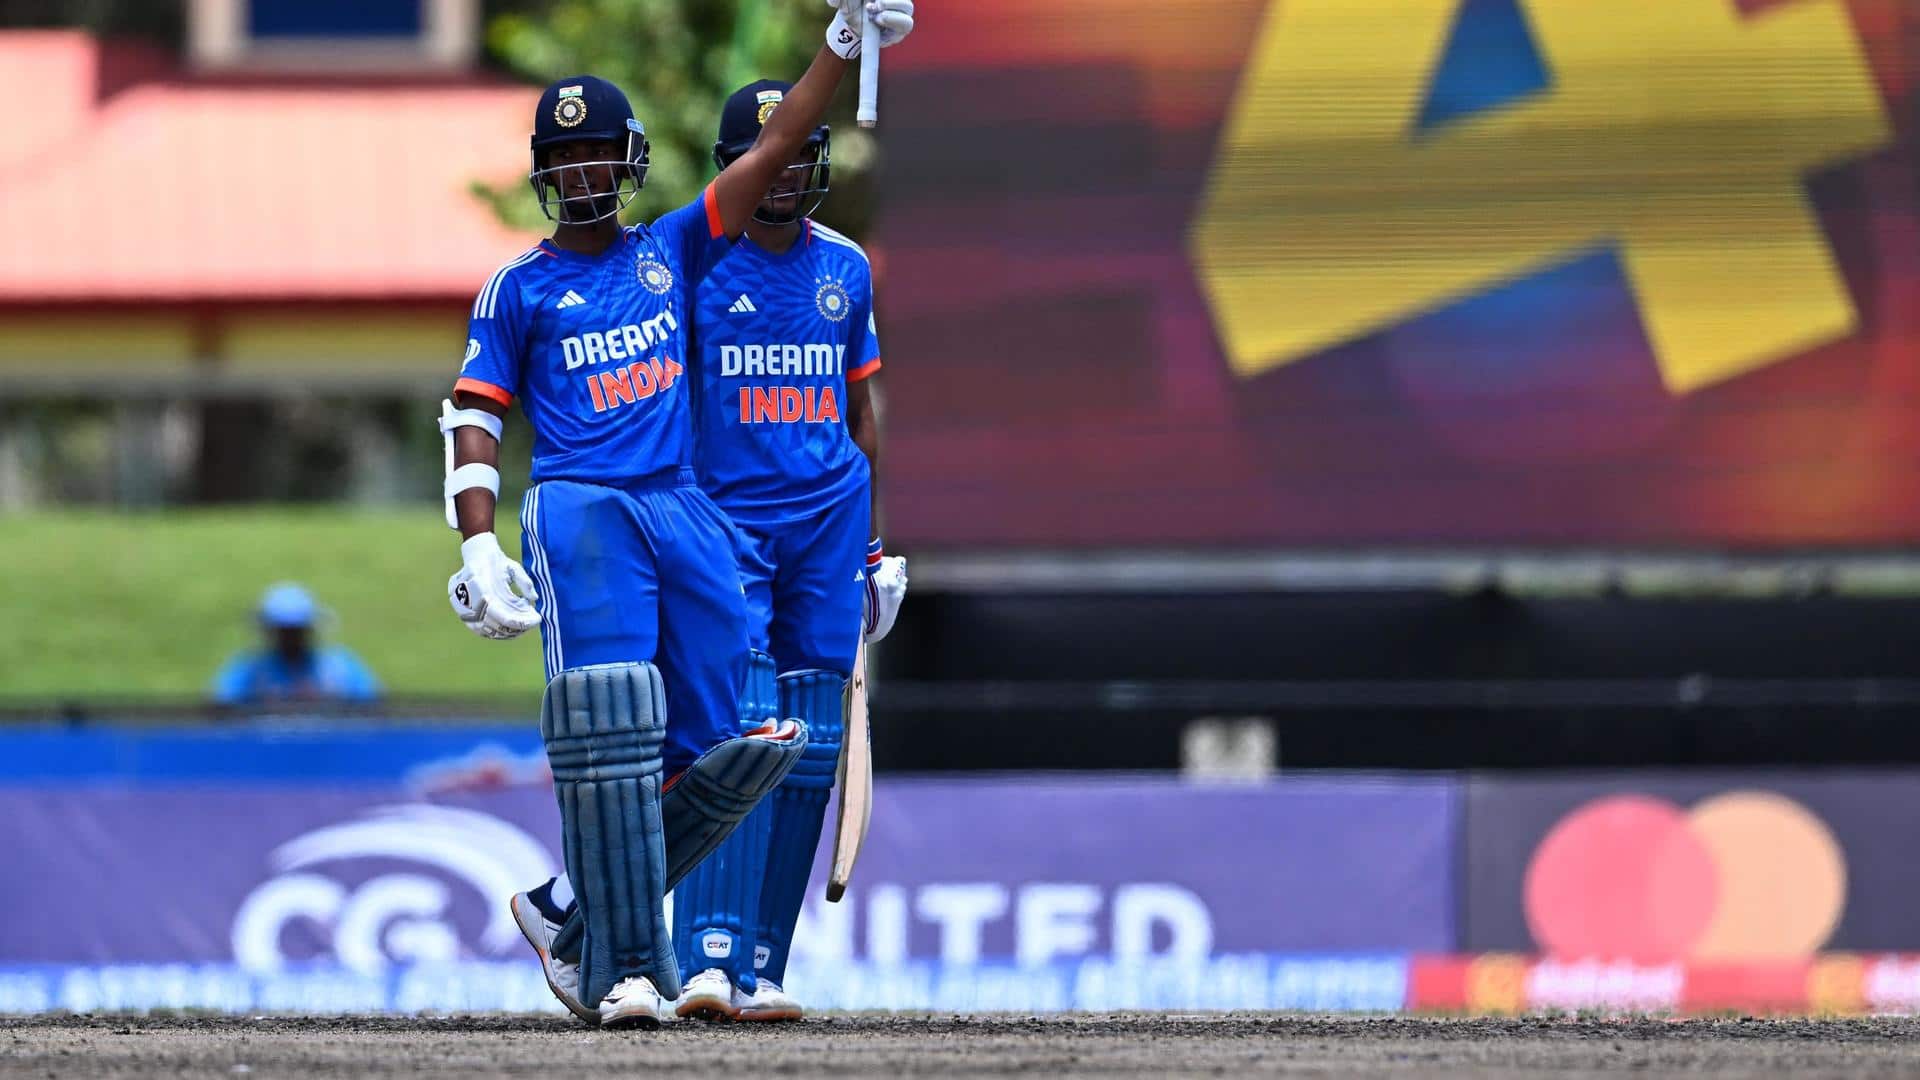 WI vs IND, 5th T20I: Hardik Pandya elects to bat